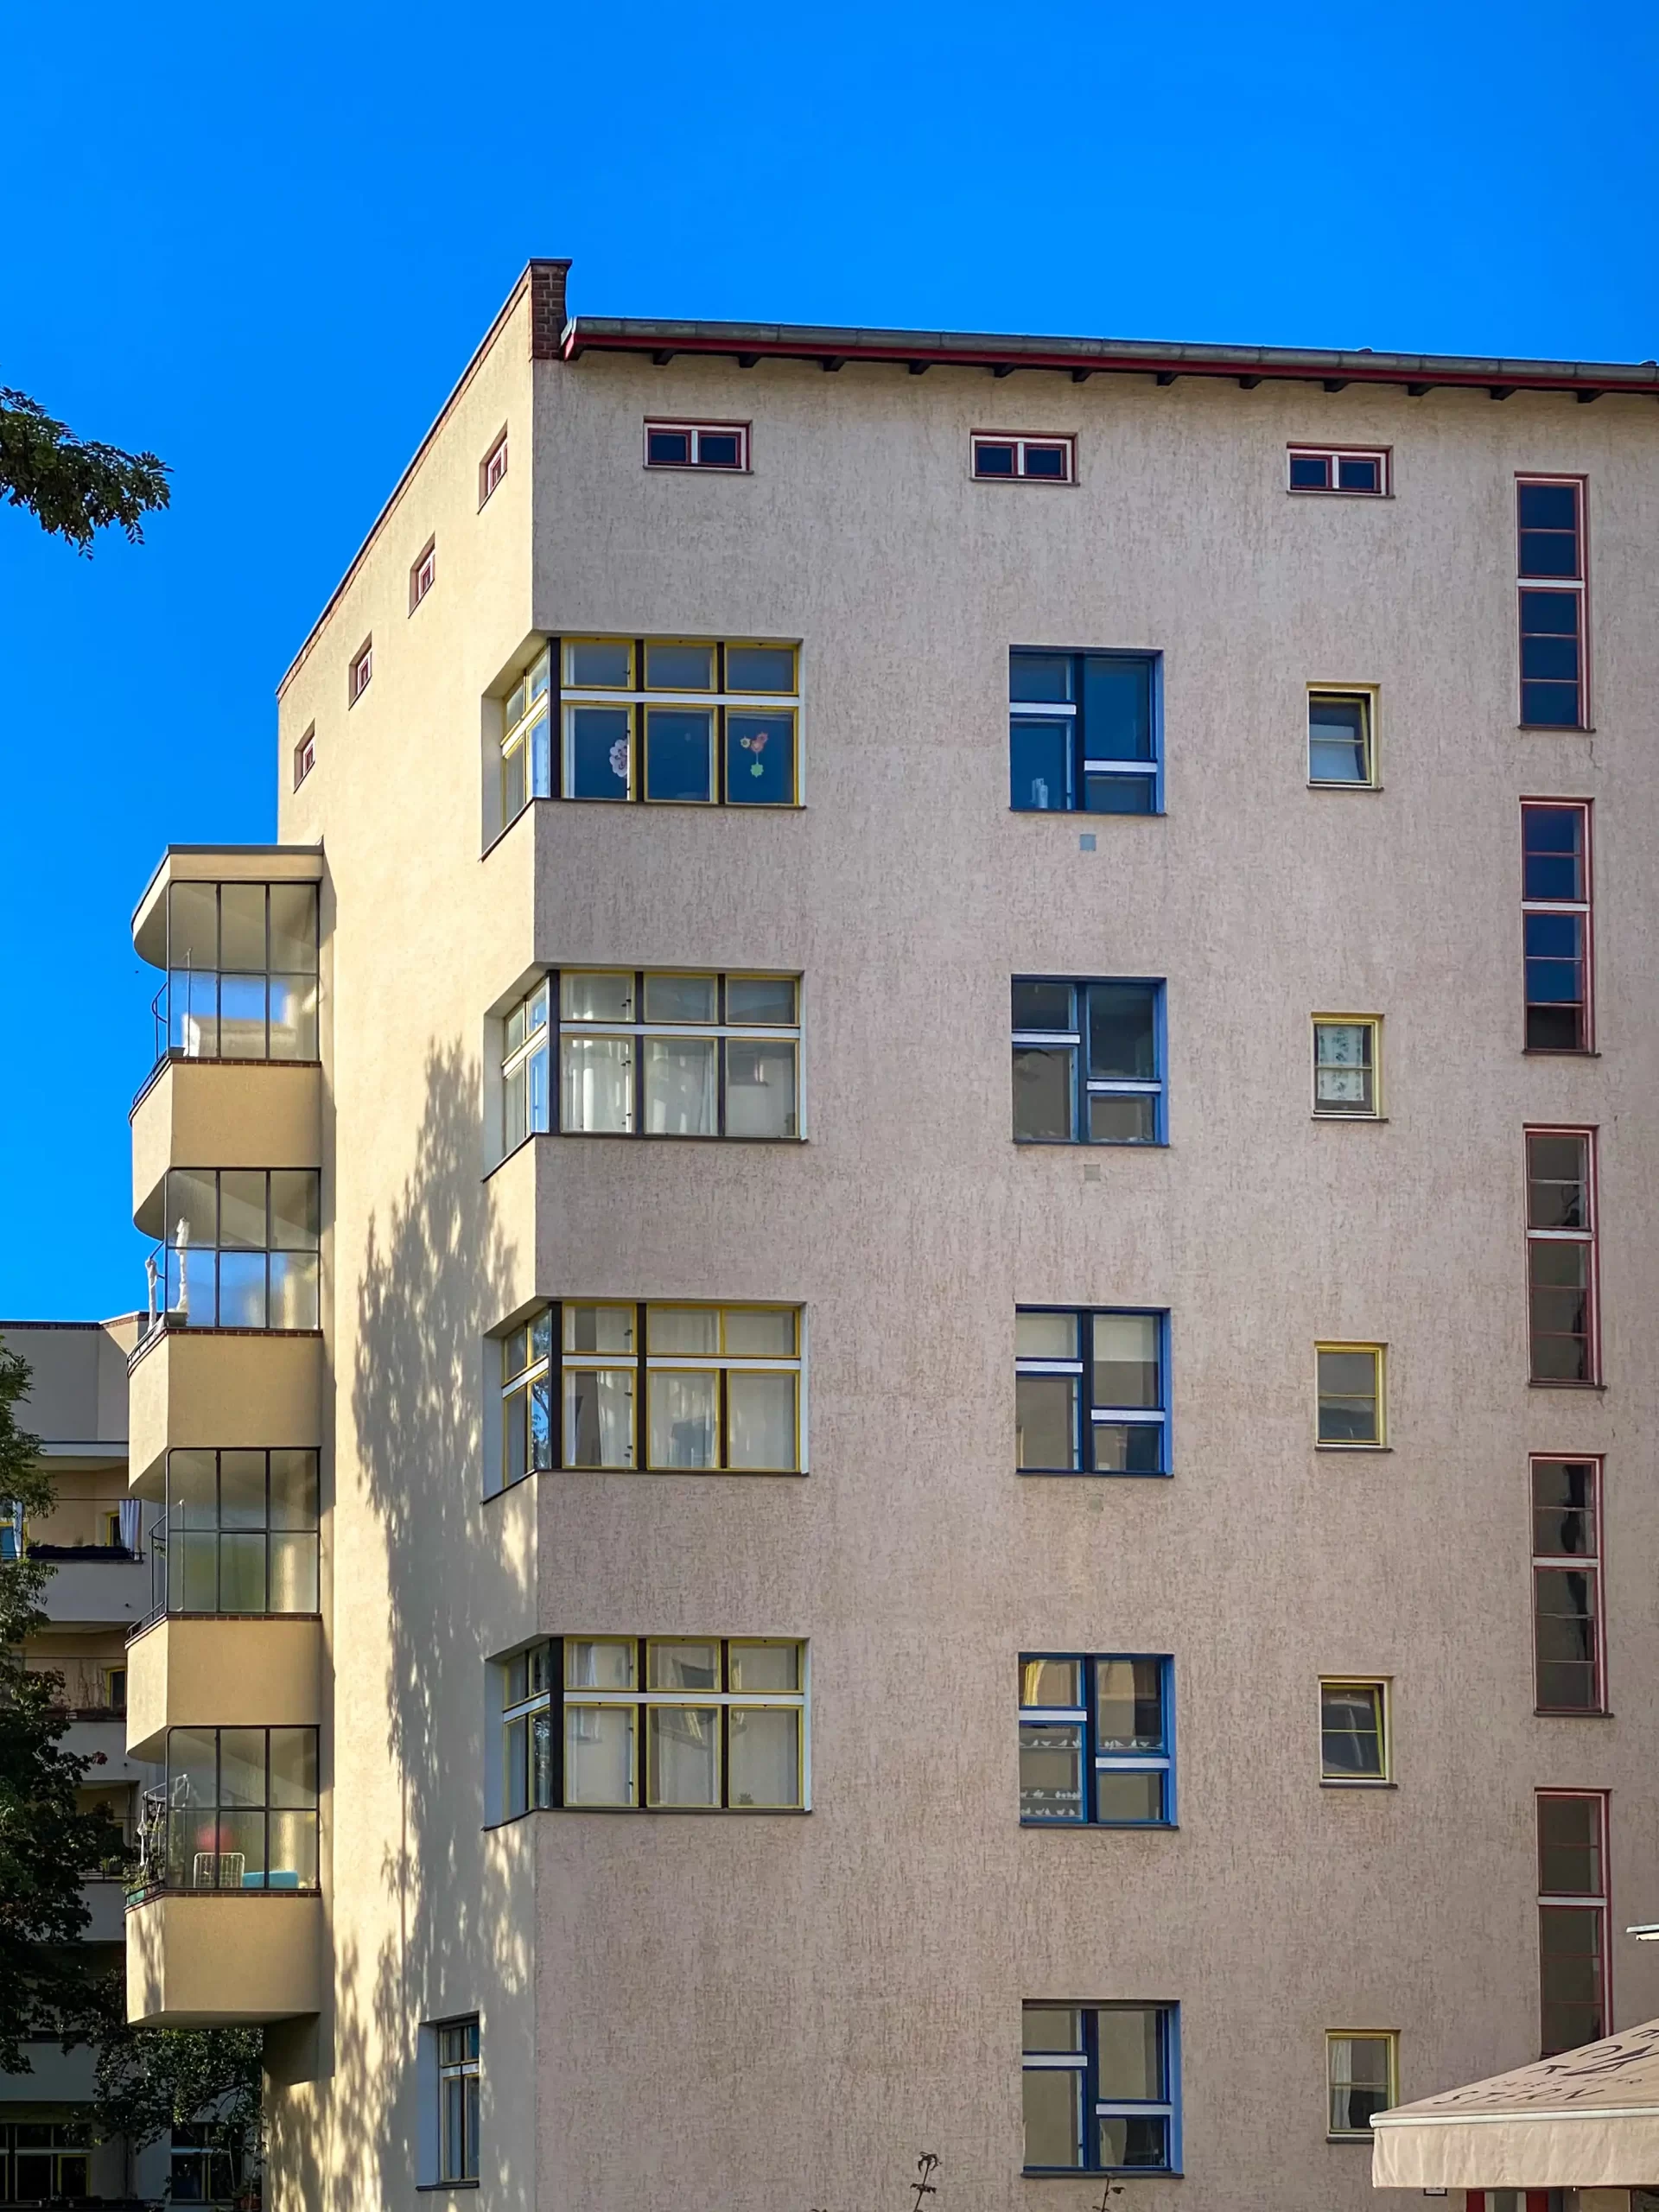 Wohnstadt Carl Legien, 1929-1930. Architects: Bruno Taut, Franz Hillinger. Photo: Daniela Christmann